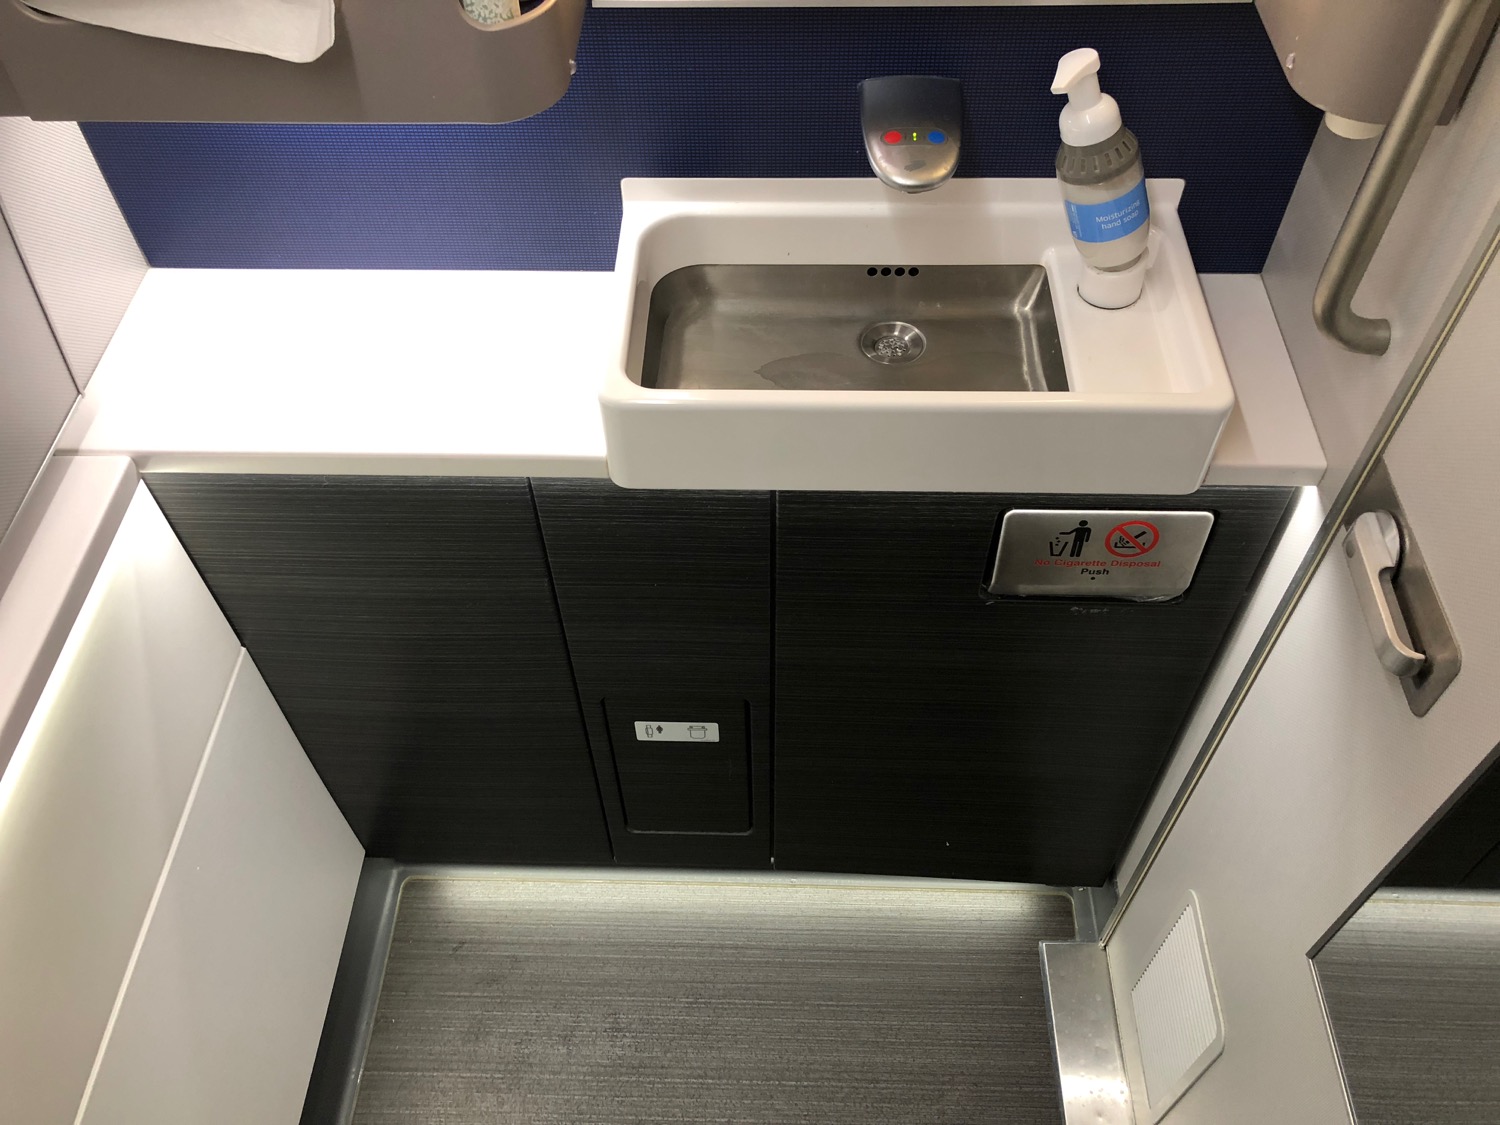 a sink in a bathroom